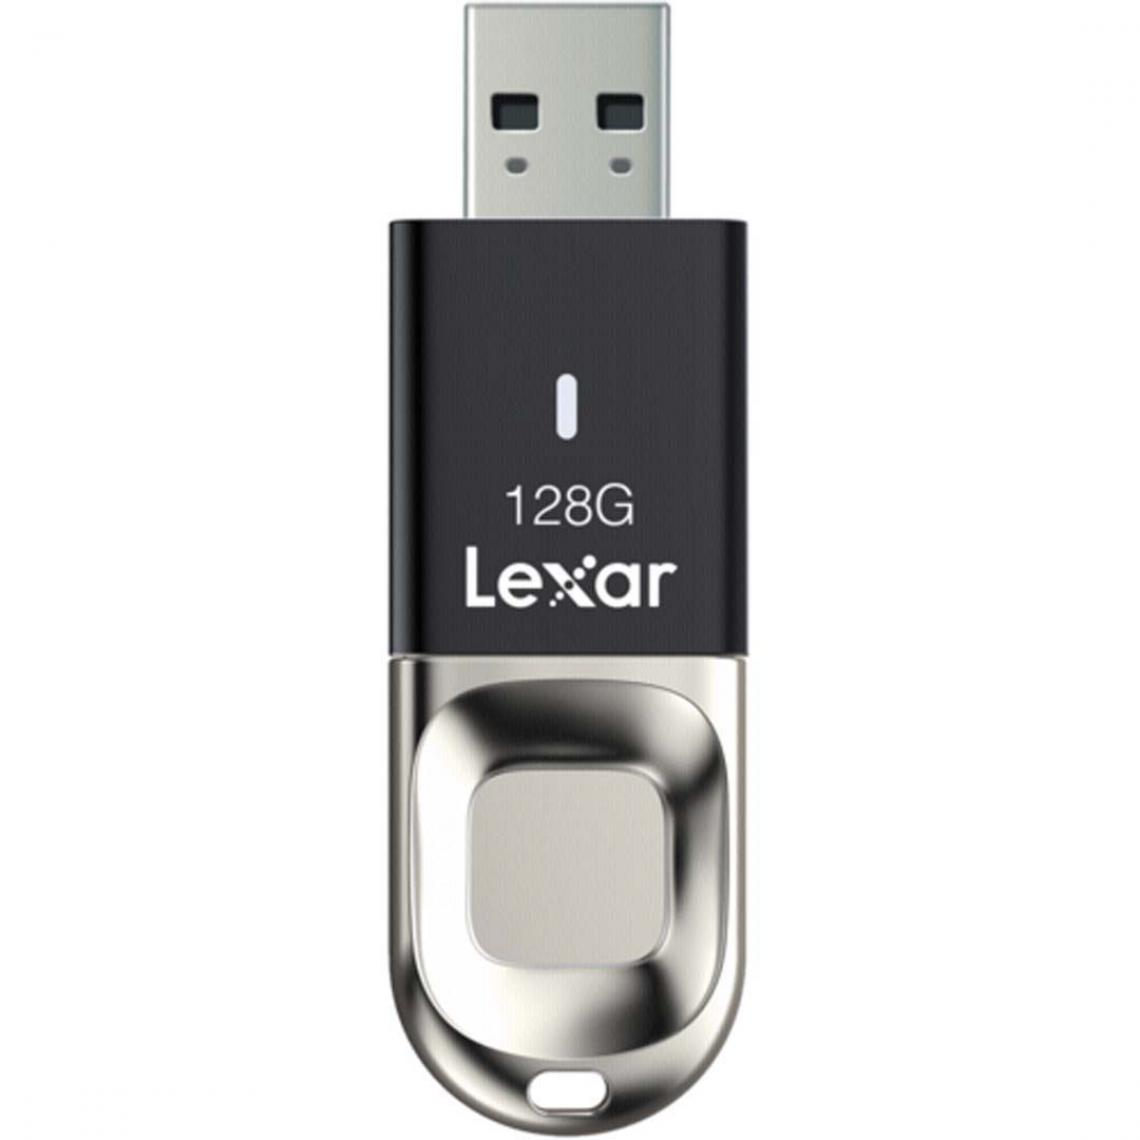 Lexar - Clé USB 128GB LEXAR Noir et Argenté - Clés USB